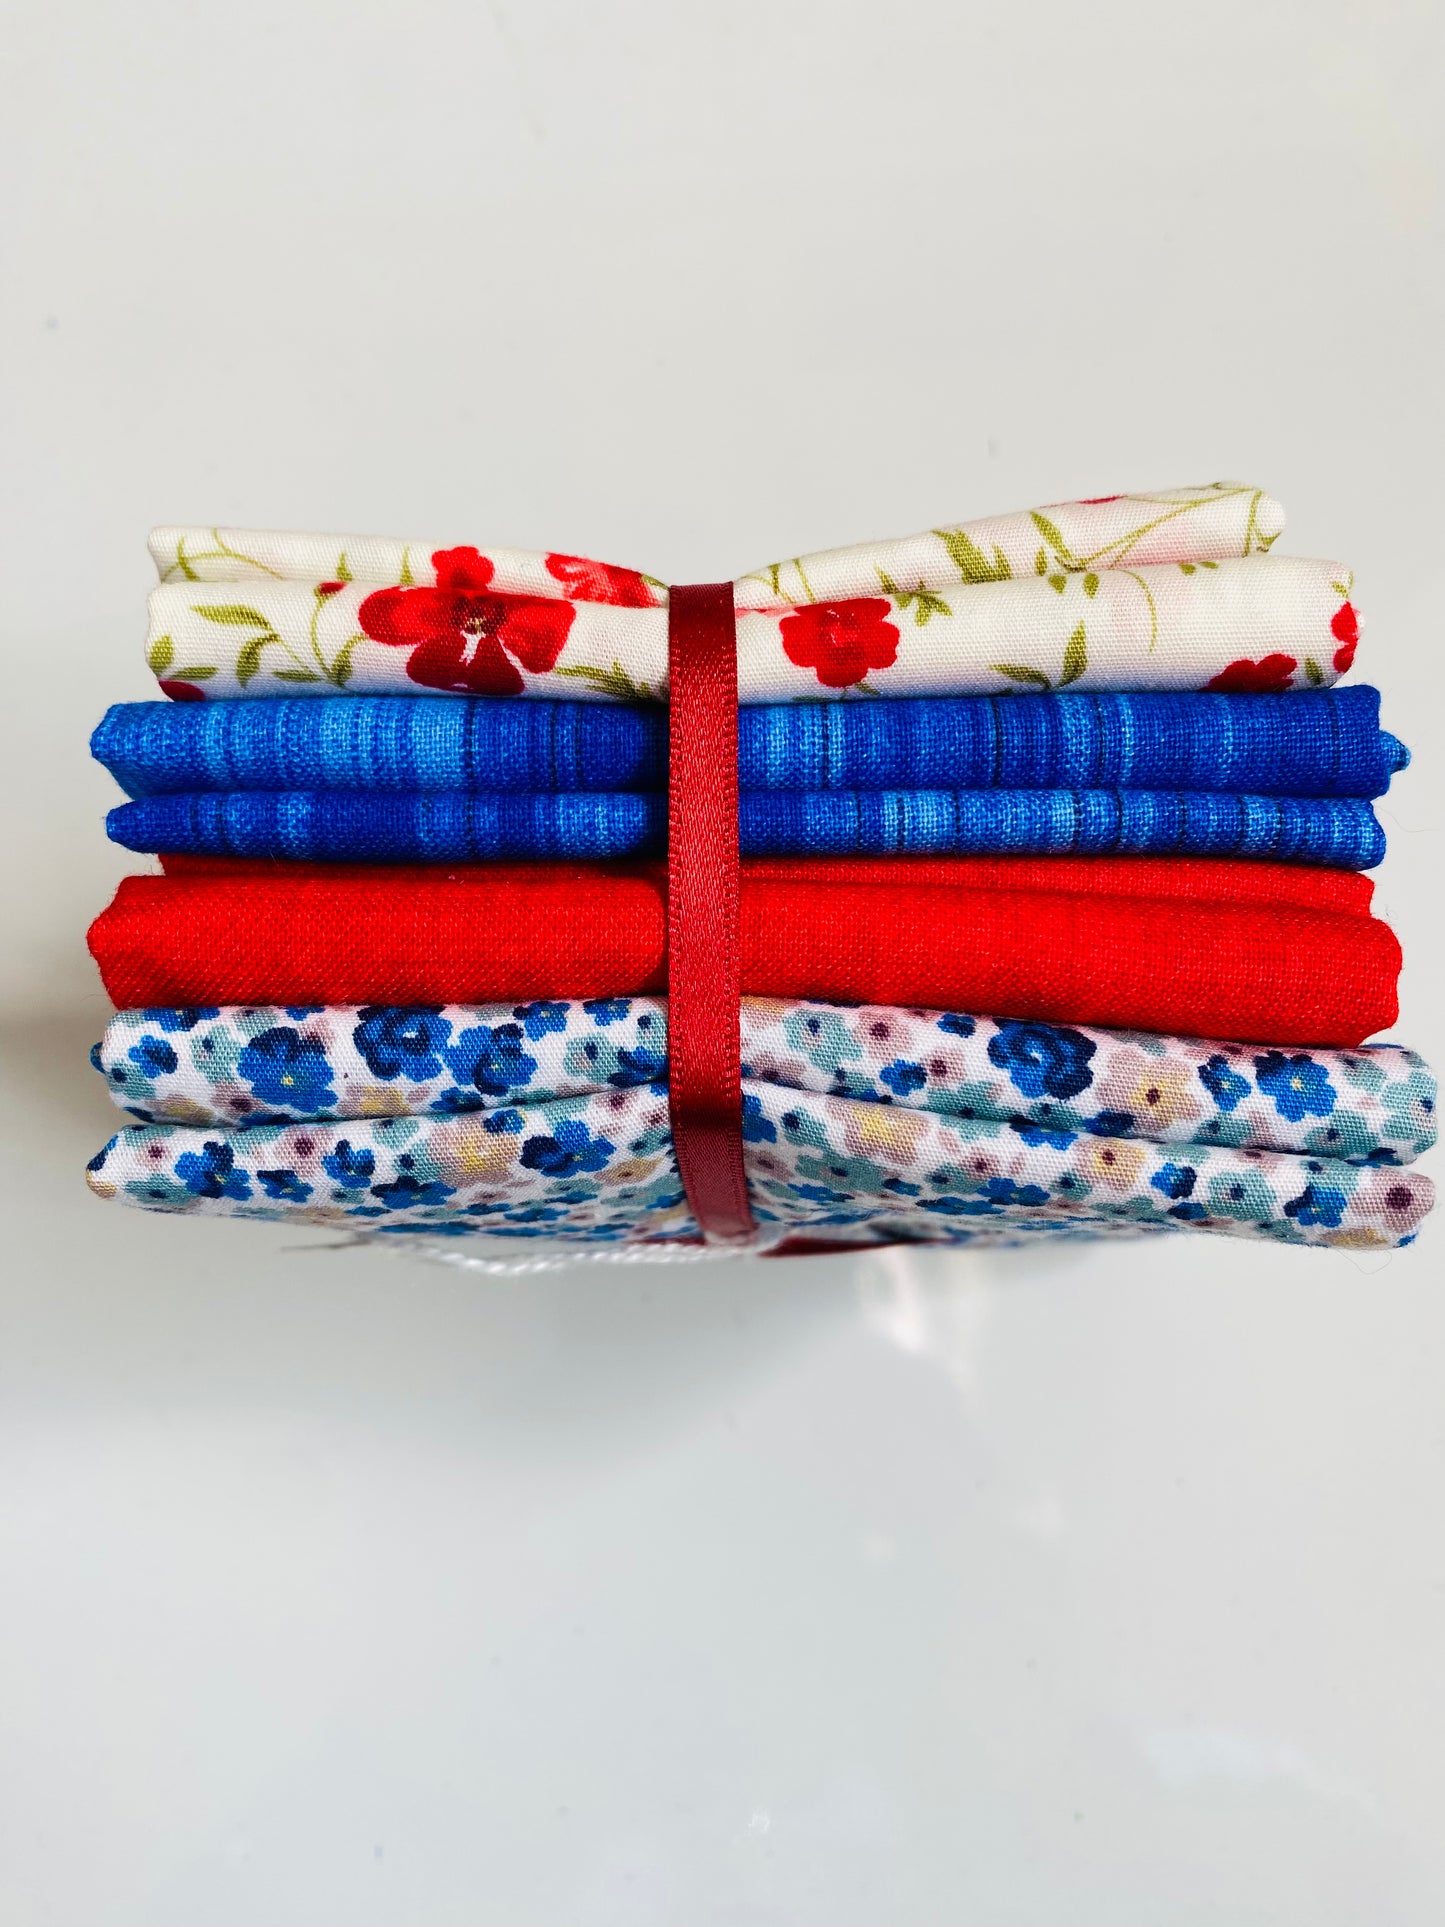 Fabric Fat Quarter Bundle - Blues and Reds - 100% Cotton